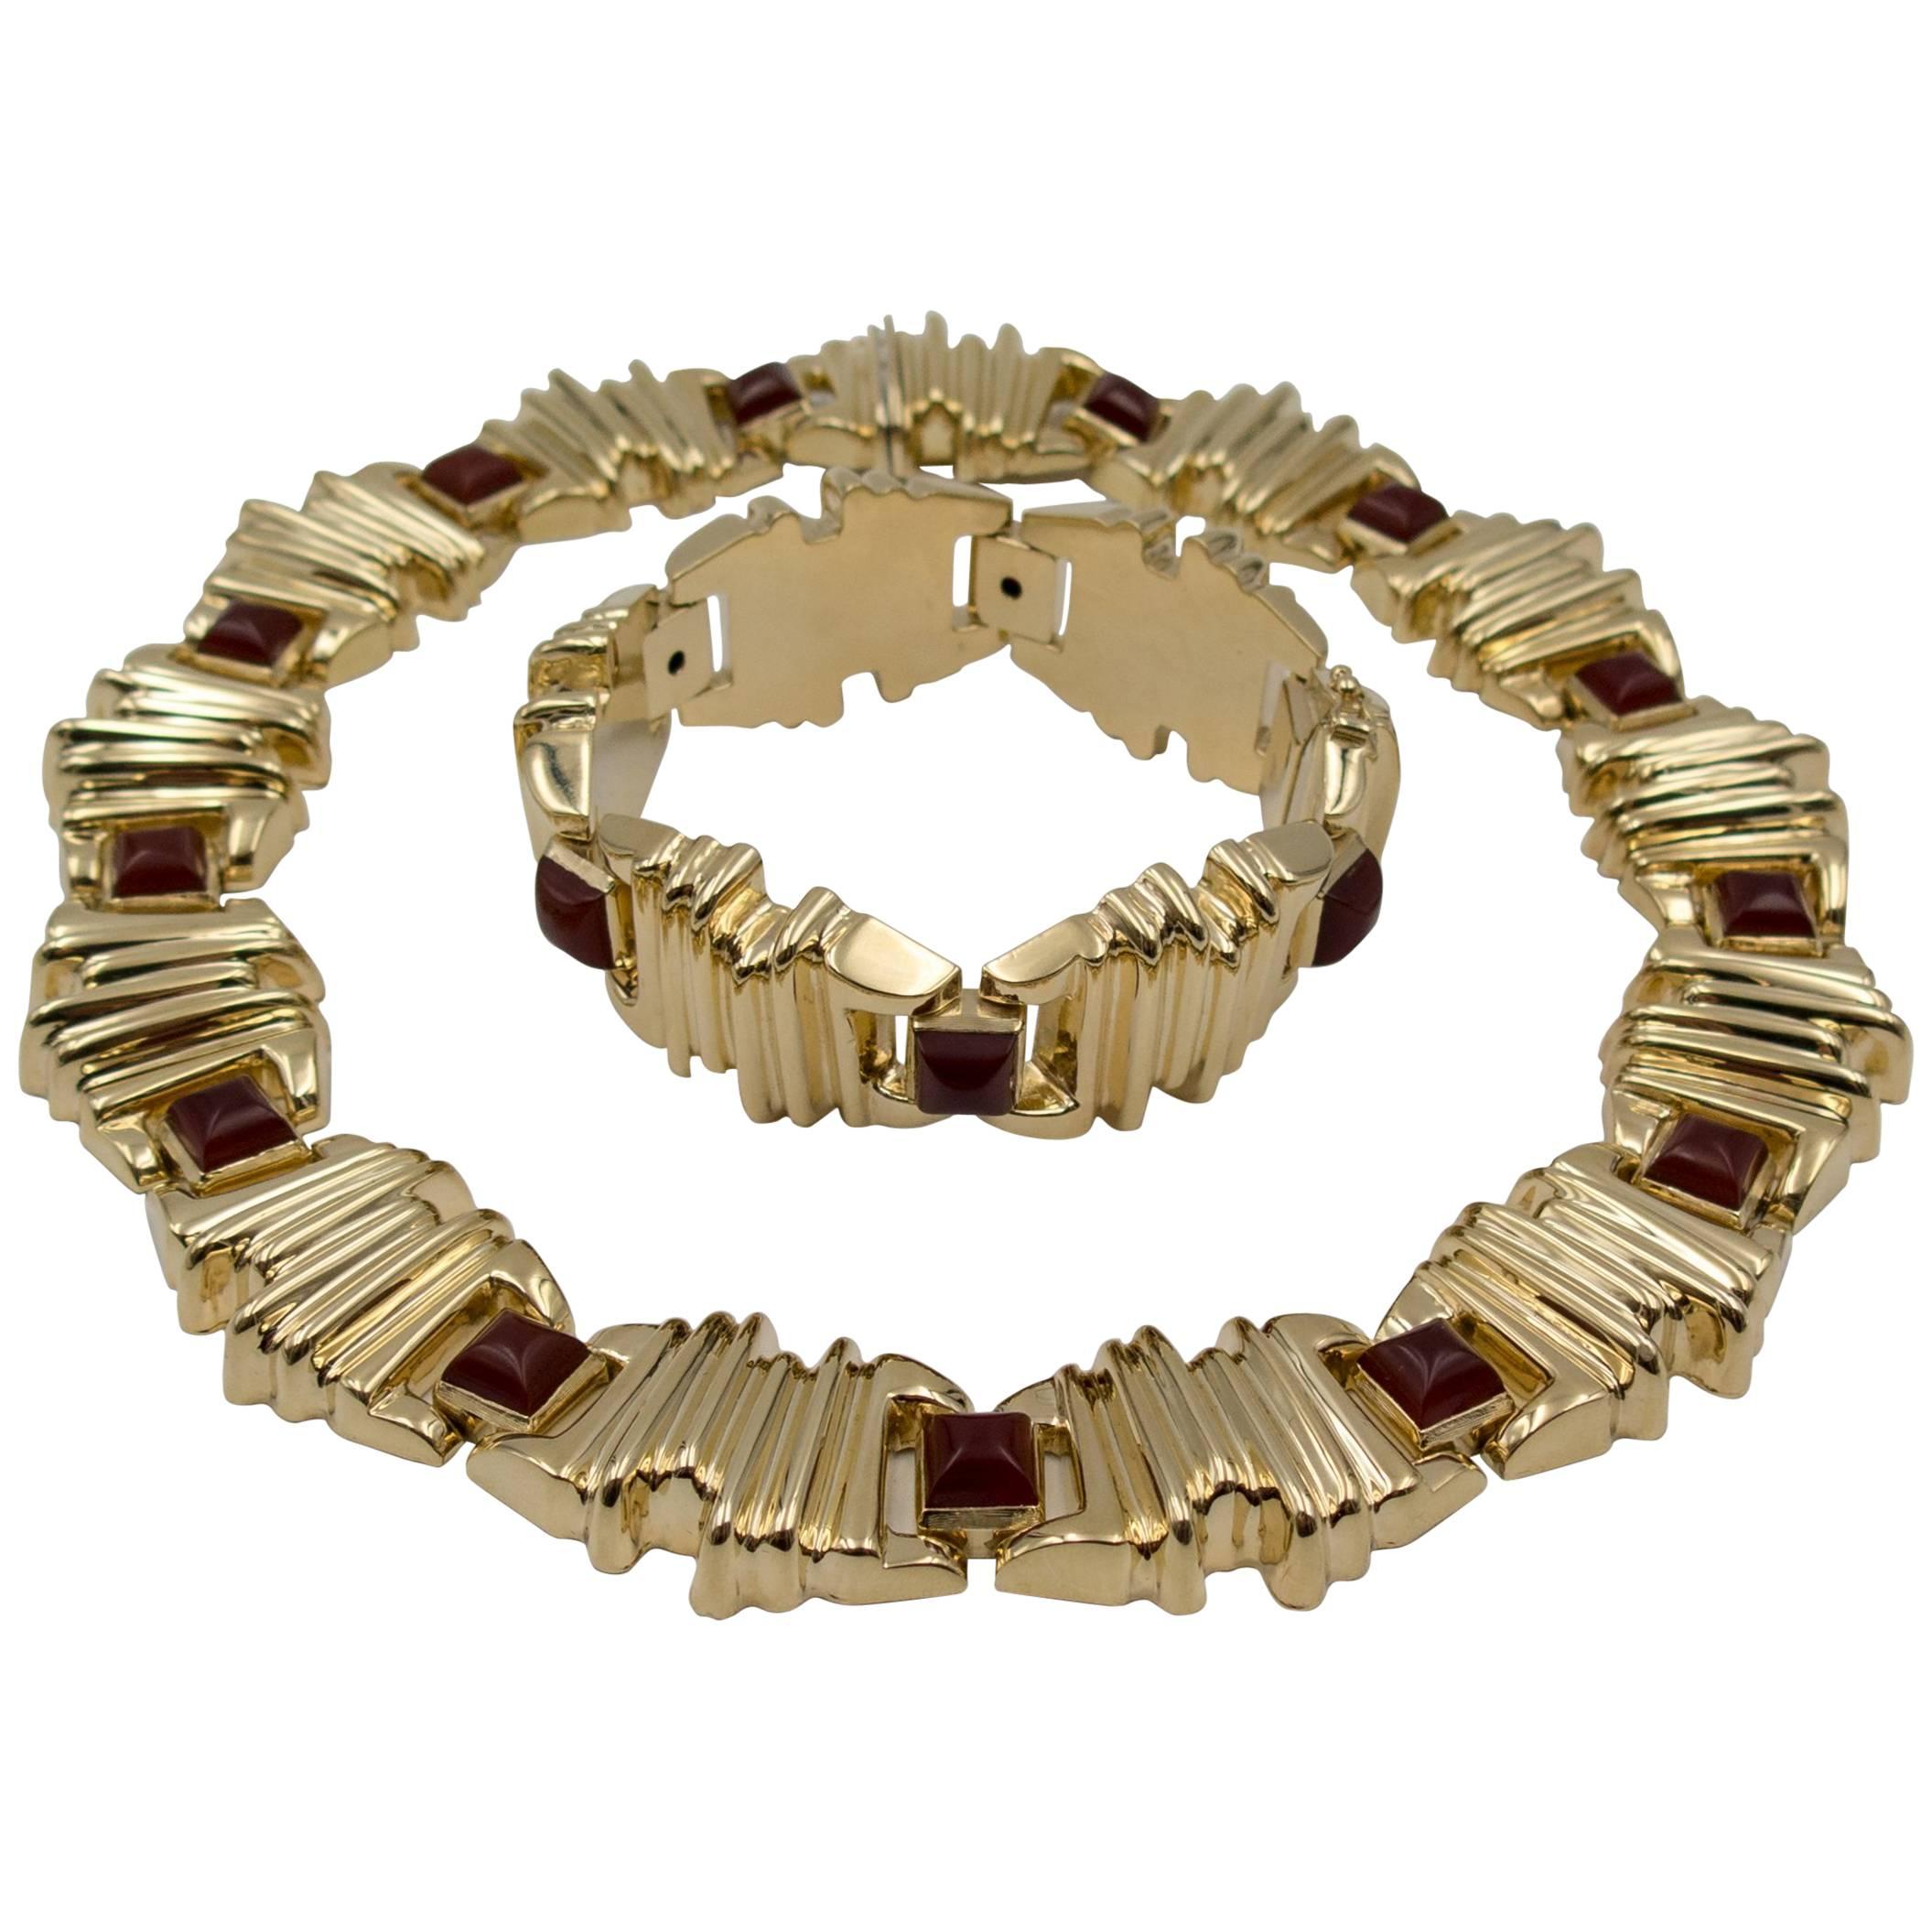  Sugarloaf Carnelian Gold Necklace and Bracelet Suite